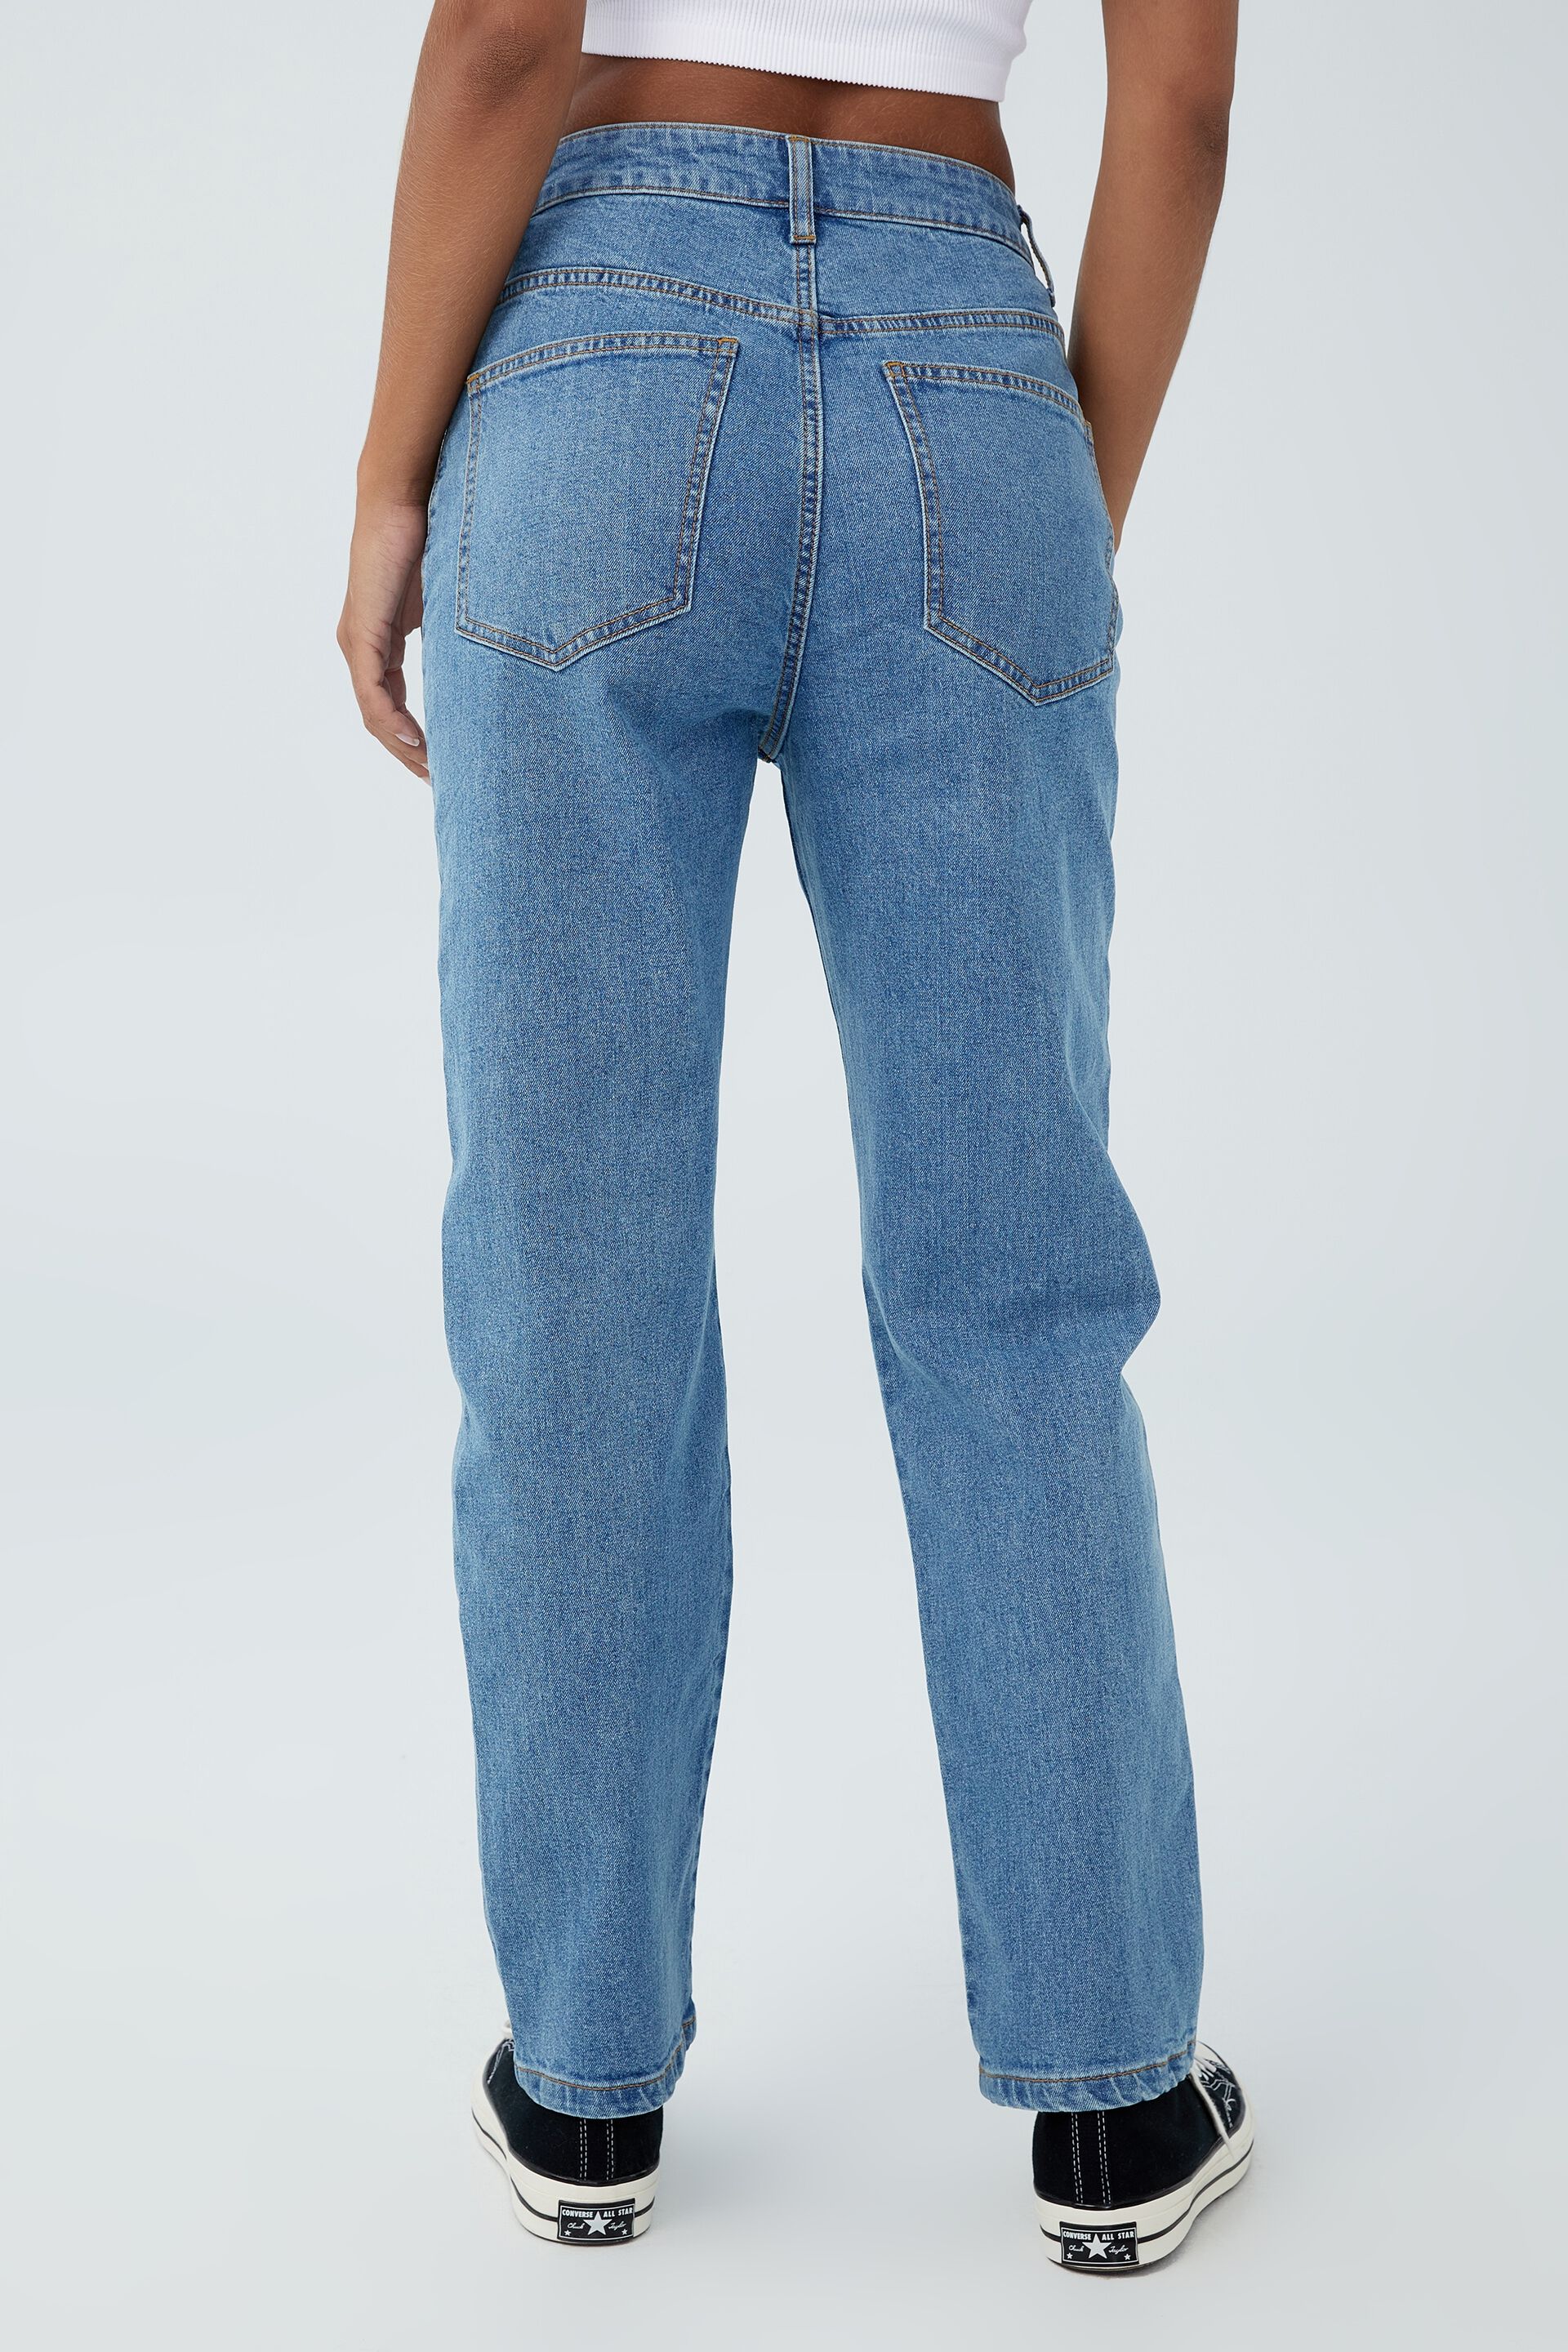 WOMEN FASHION Jeans Worn-in discount 86% Blue M Tezenis mom-fit jeans 